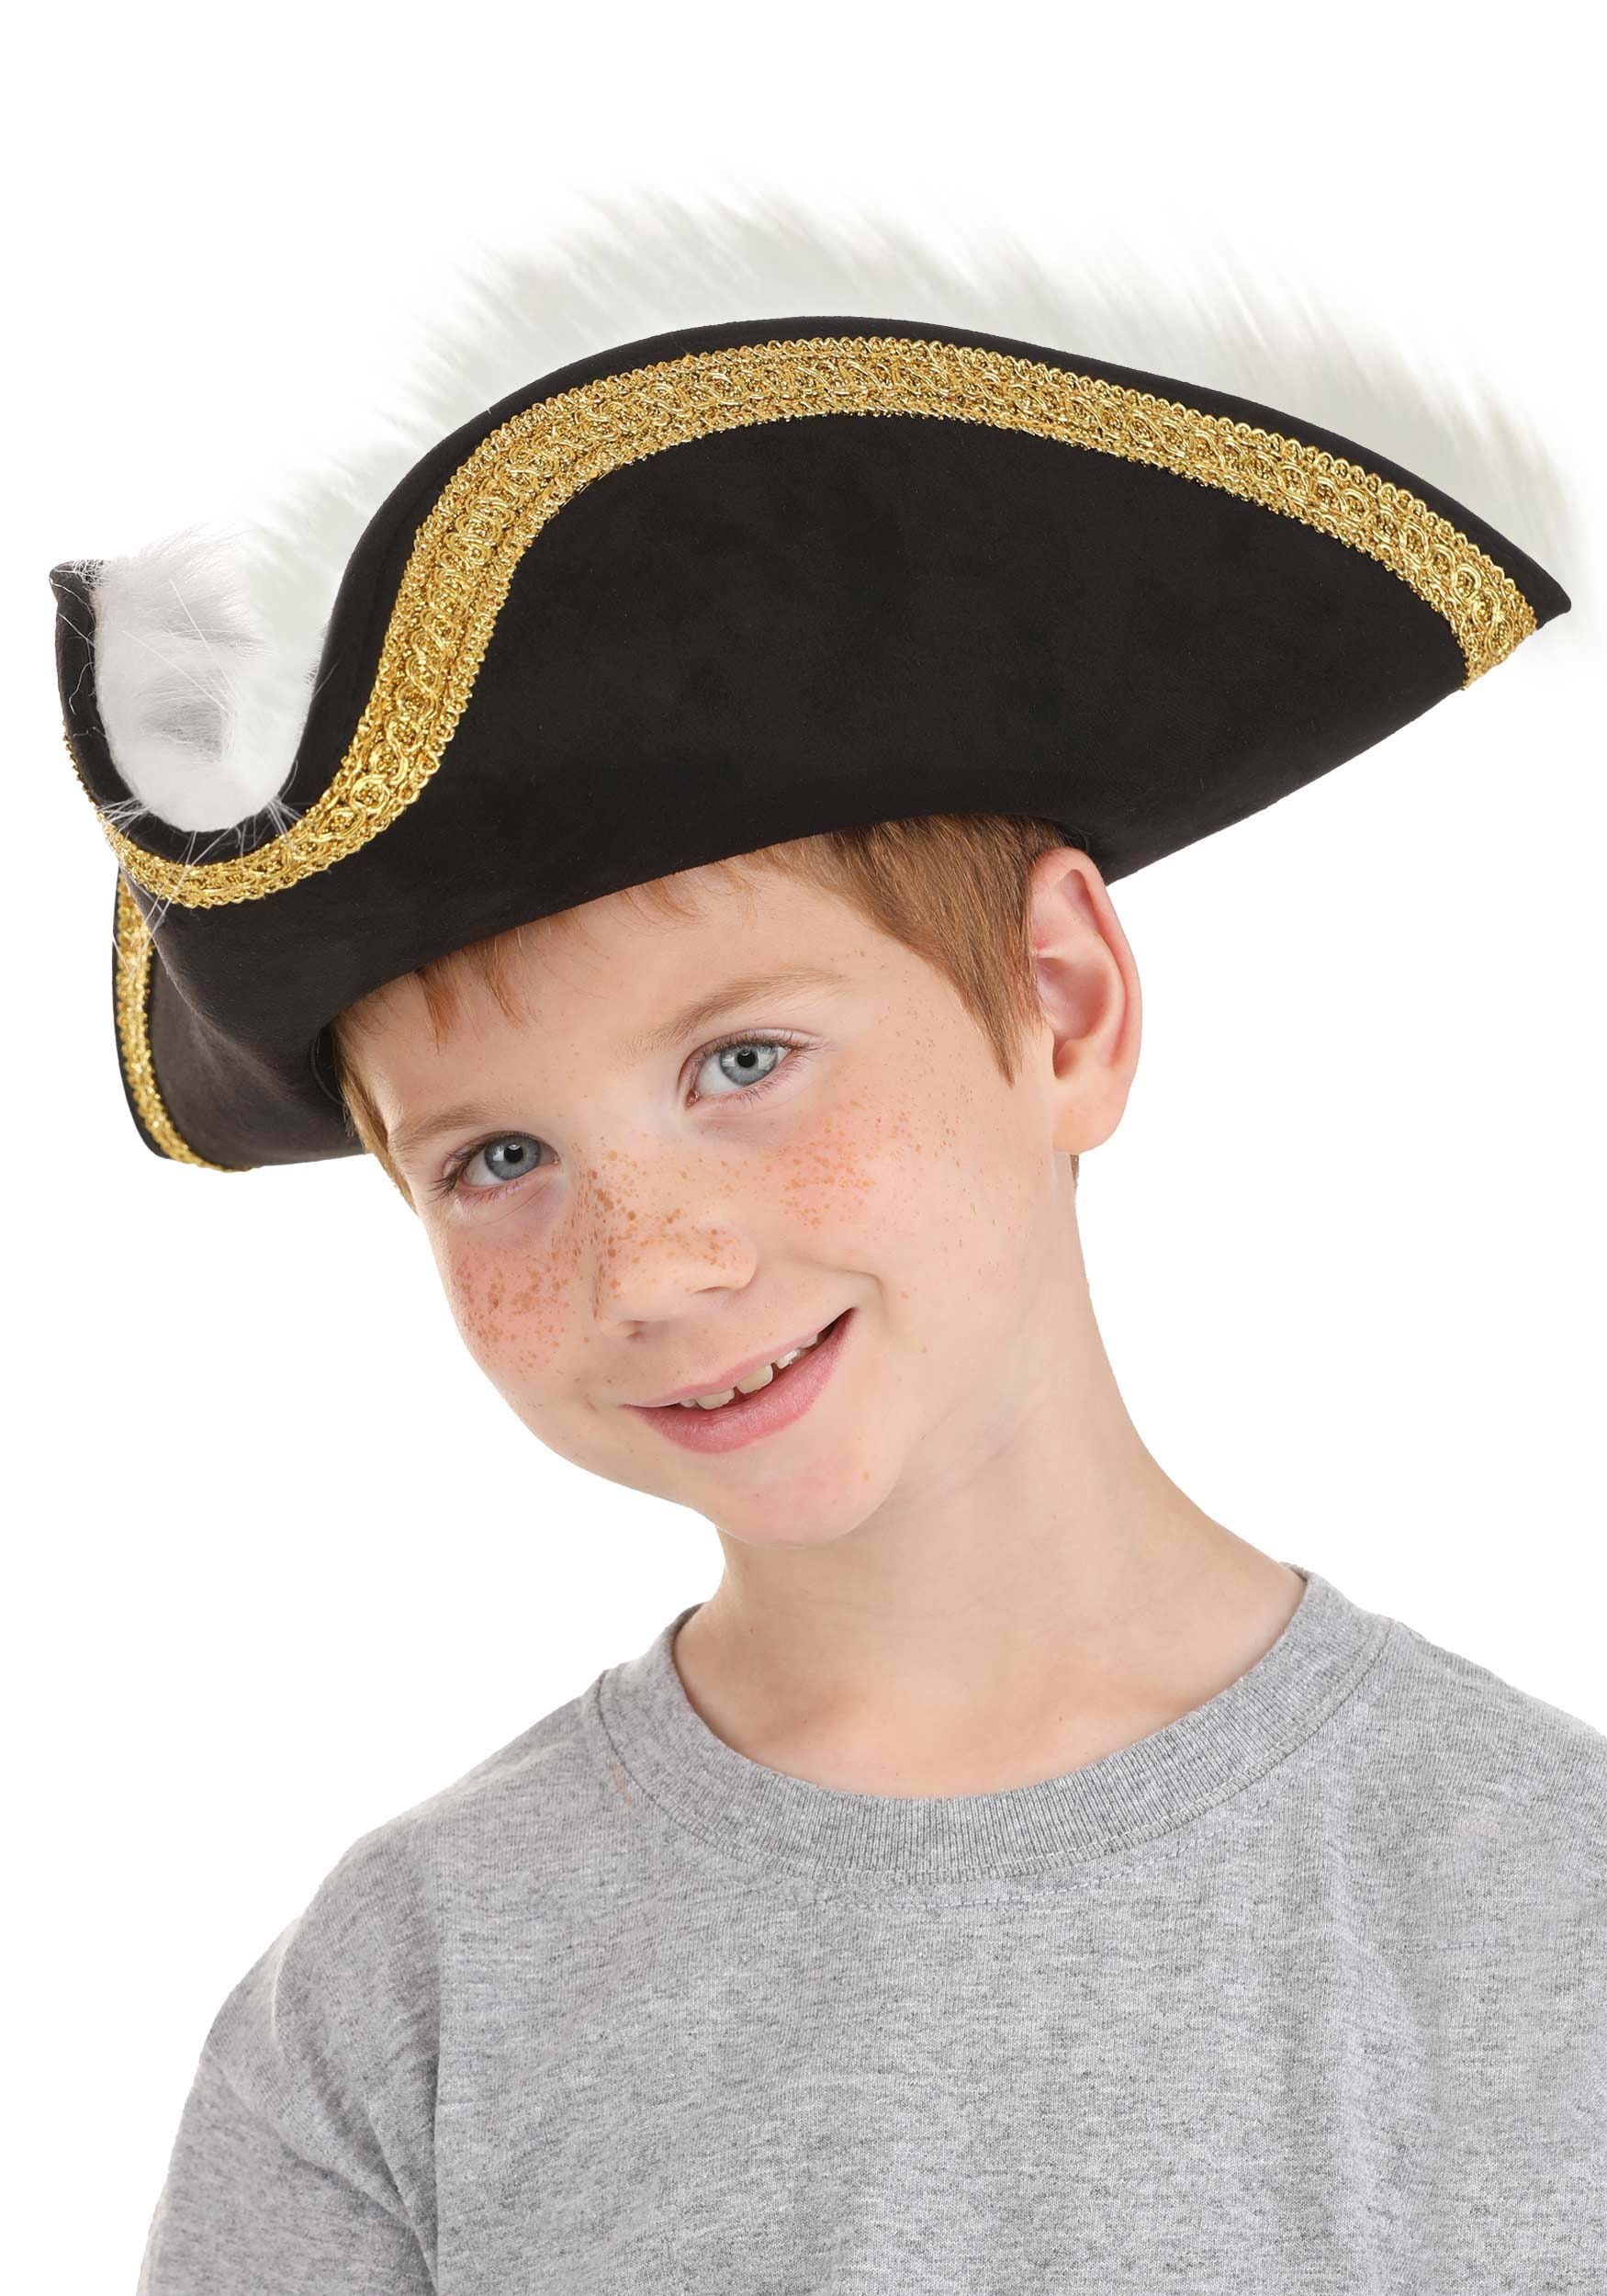 https://images.halloweencostumes.com/products/87237/1-1/elite-captain-hook-kids-hat.jpg